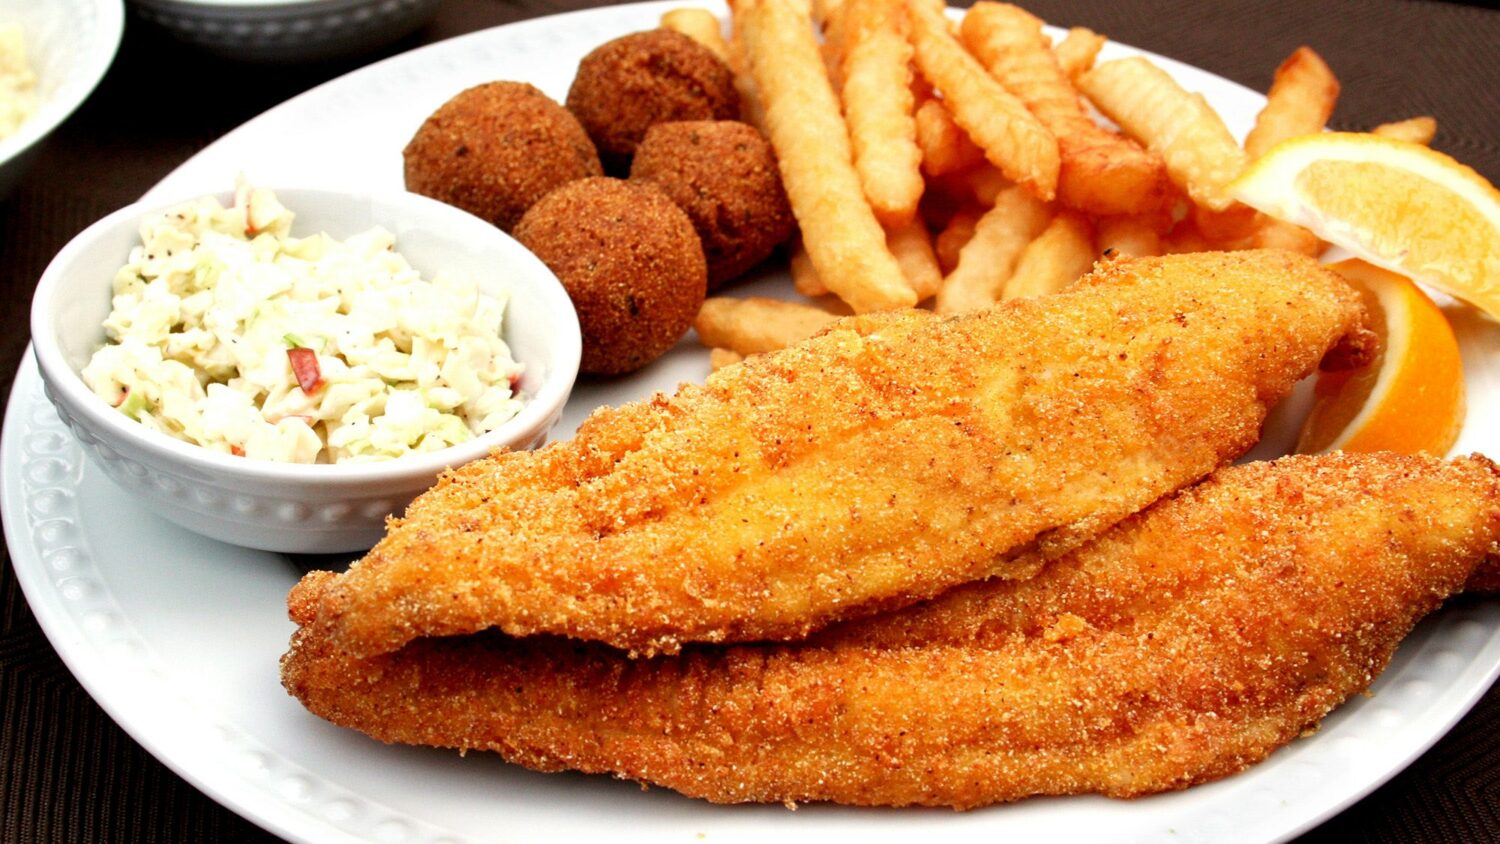 Lenten Dinner - All You Can Eat Fish Fry